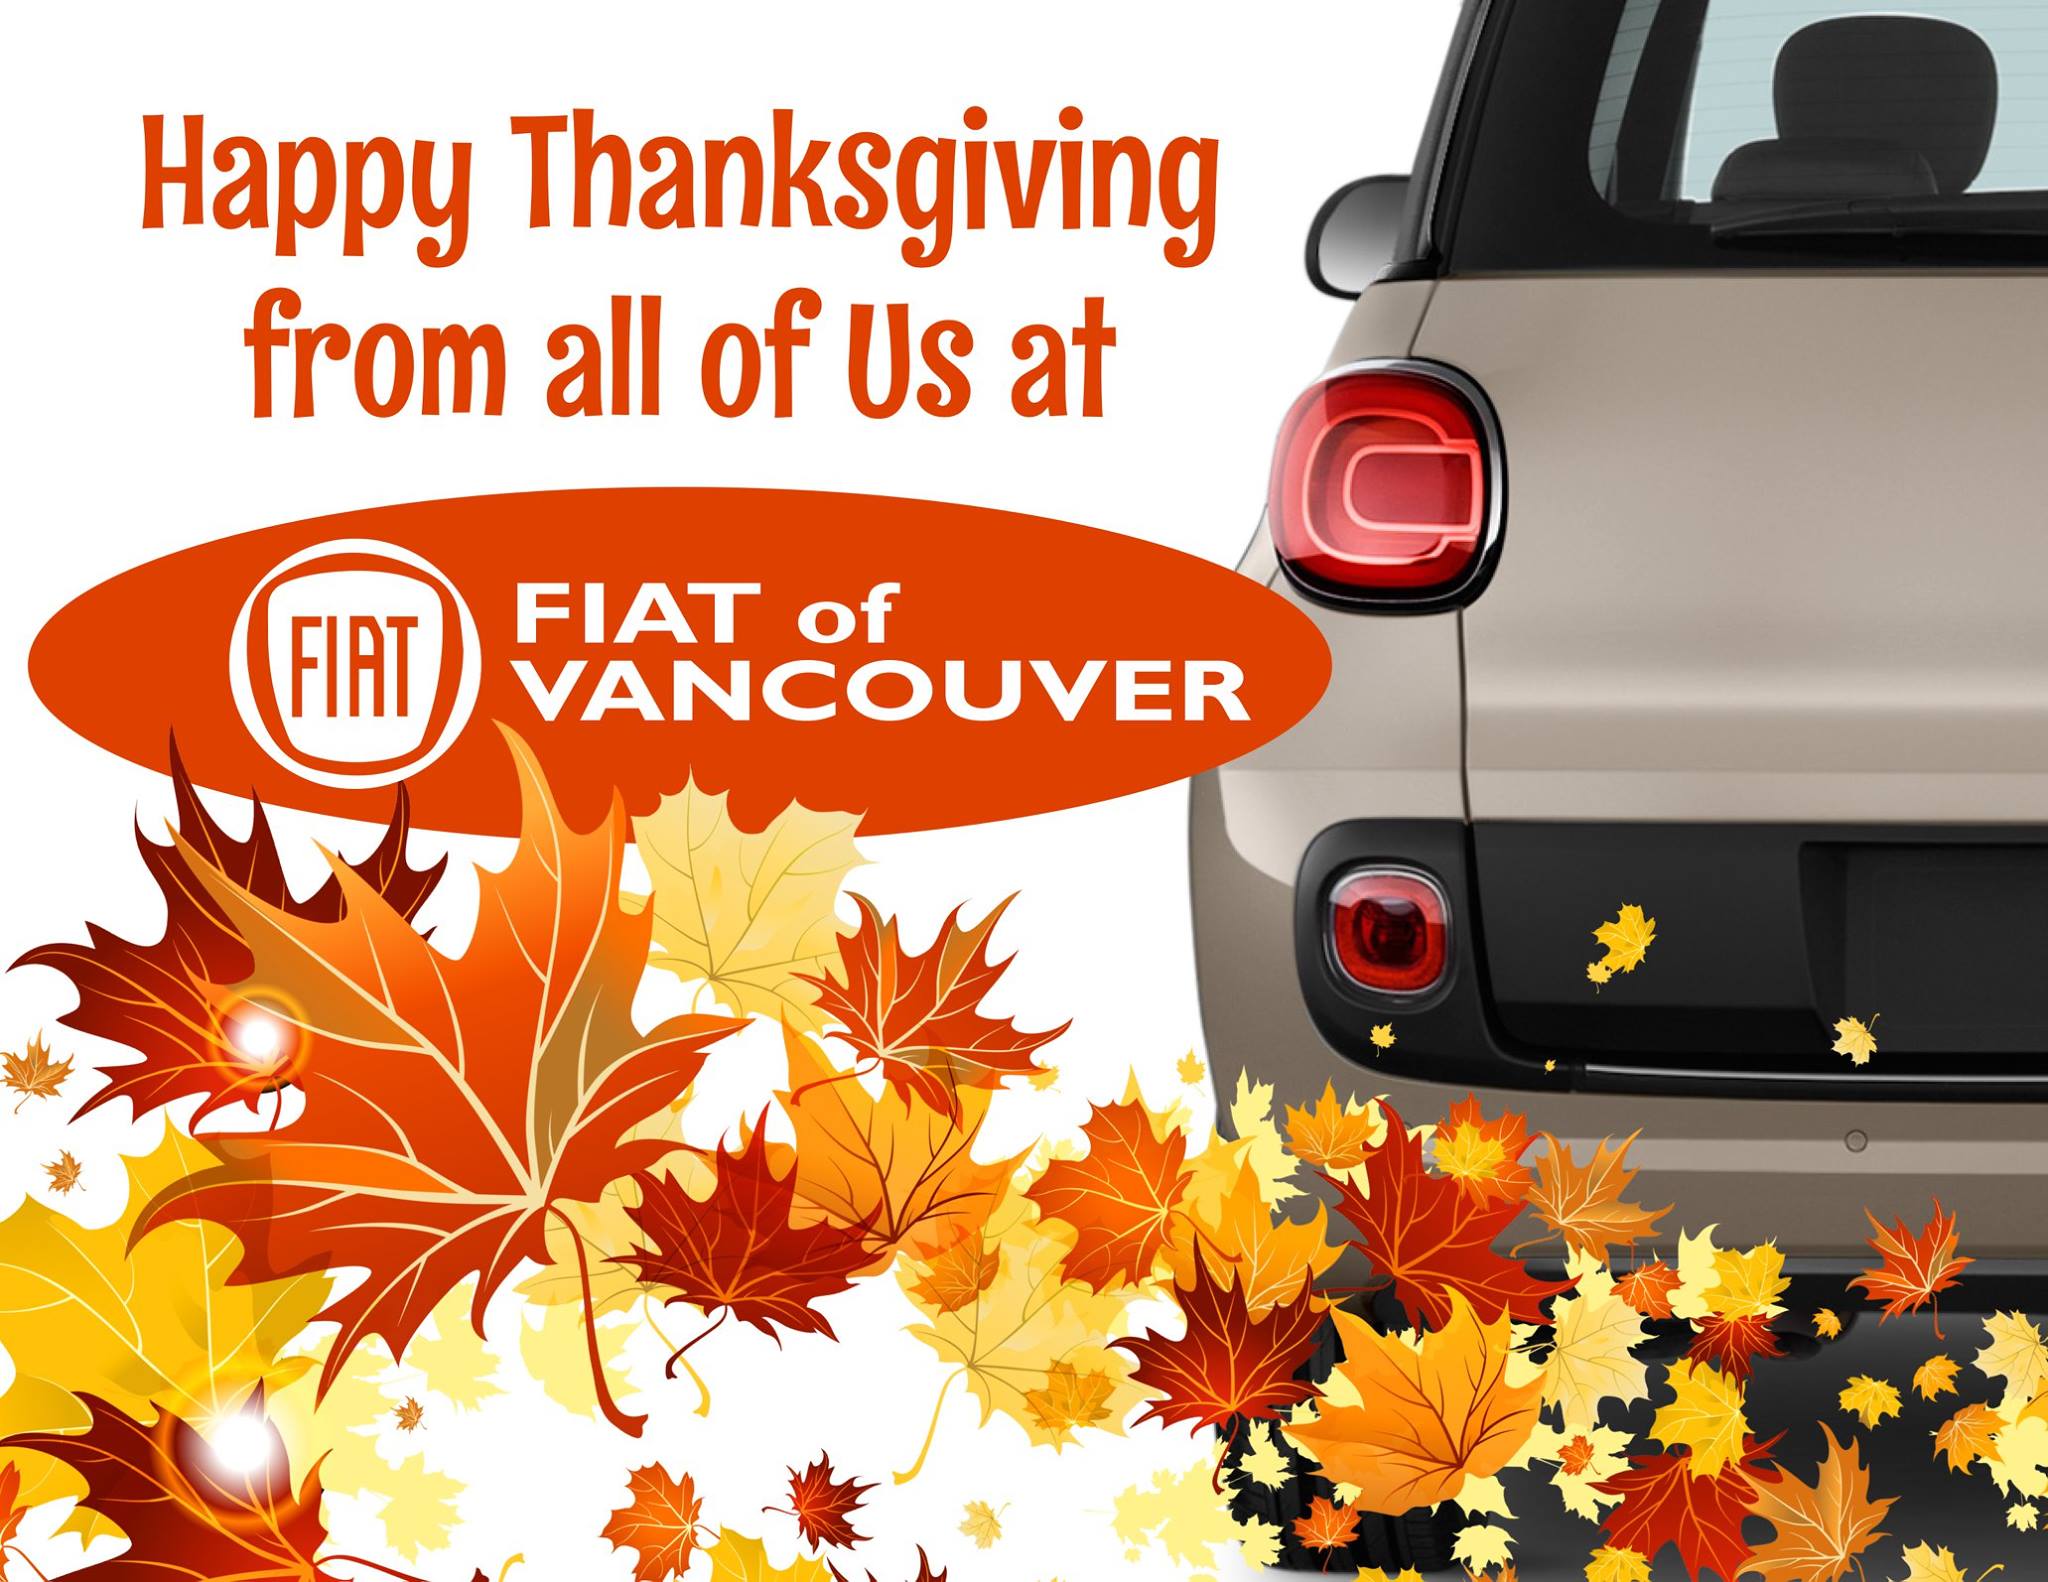 Fiat-vancouver-happy-thanksgiving